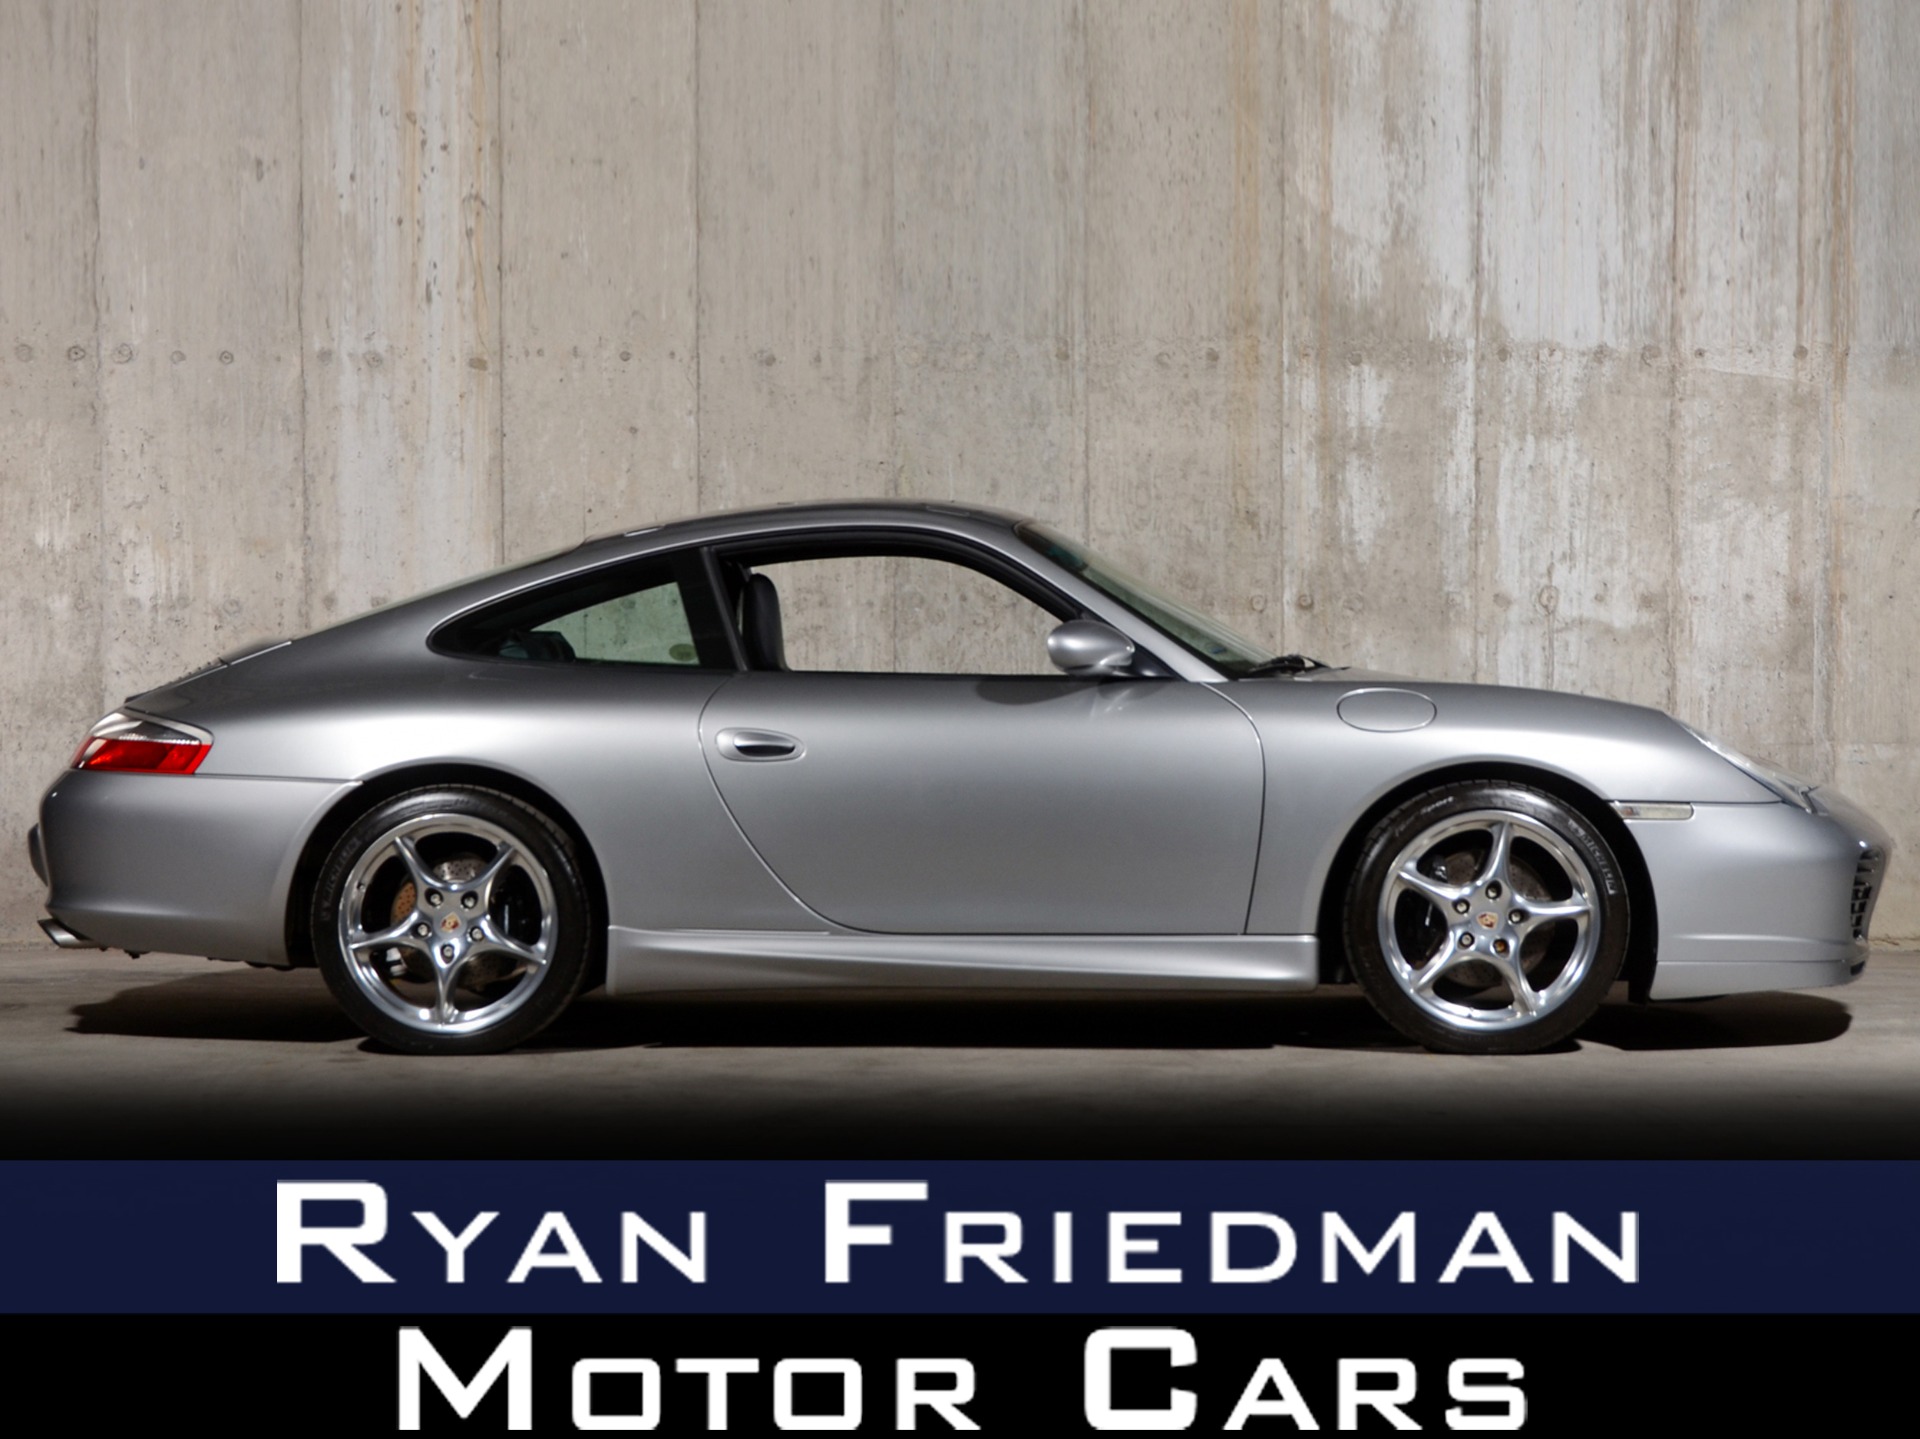 Ryan 911 | LLC 2004 (Sold) Anniversary Edition Motor Sale Carrera Used For Friedman Stock Cars Porsche 40th #1406